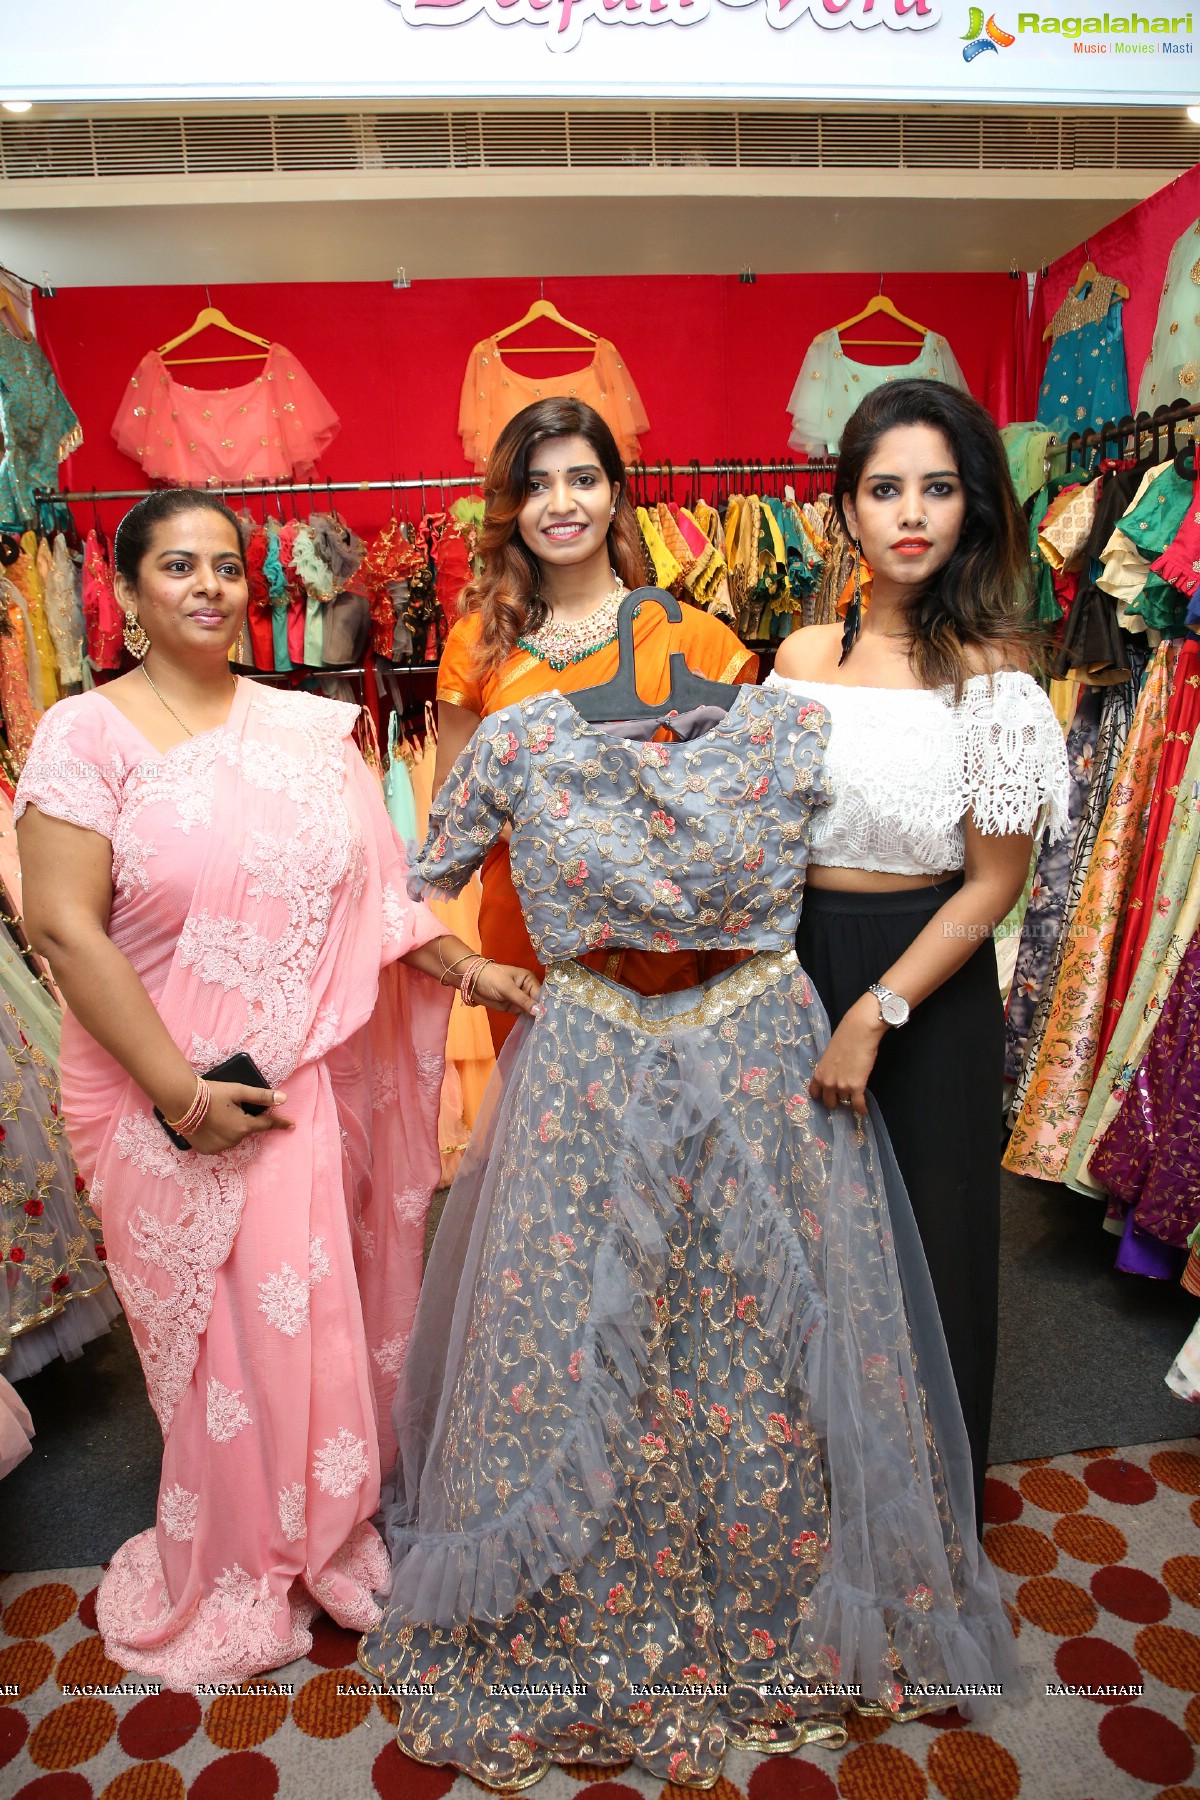 Trendz Exhibition Kicked off At Taj Krishna